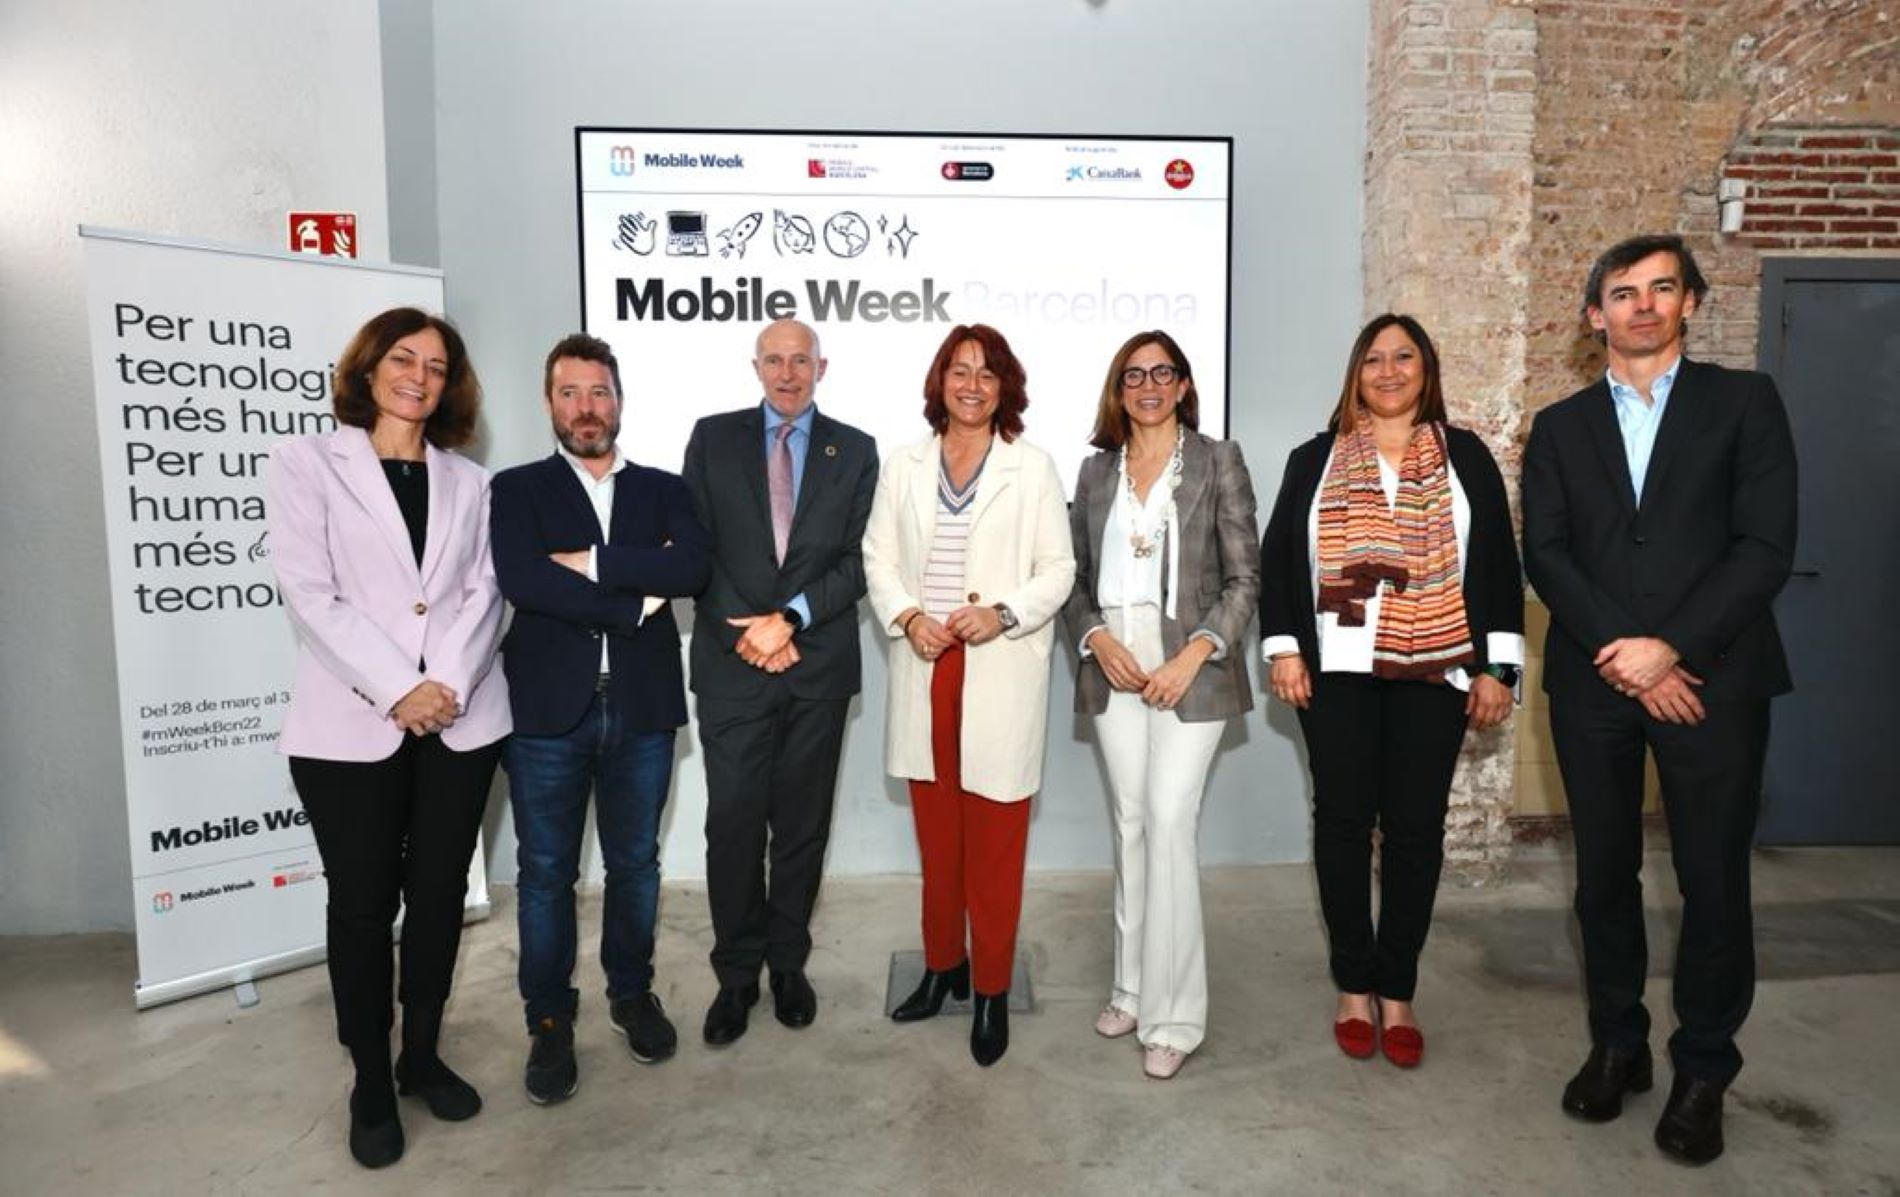 La Mobile Week Barcelona inicia la sisena edició fusionant tecnologia i humanisme